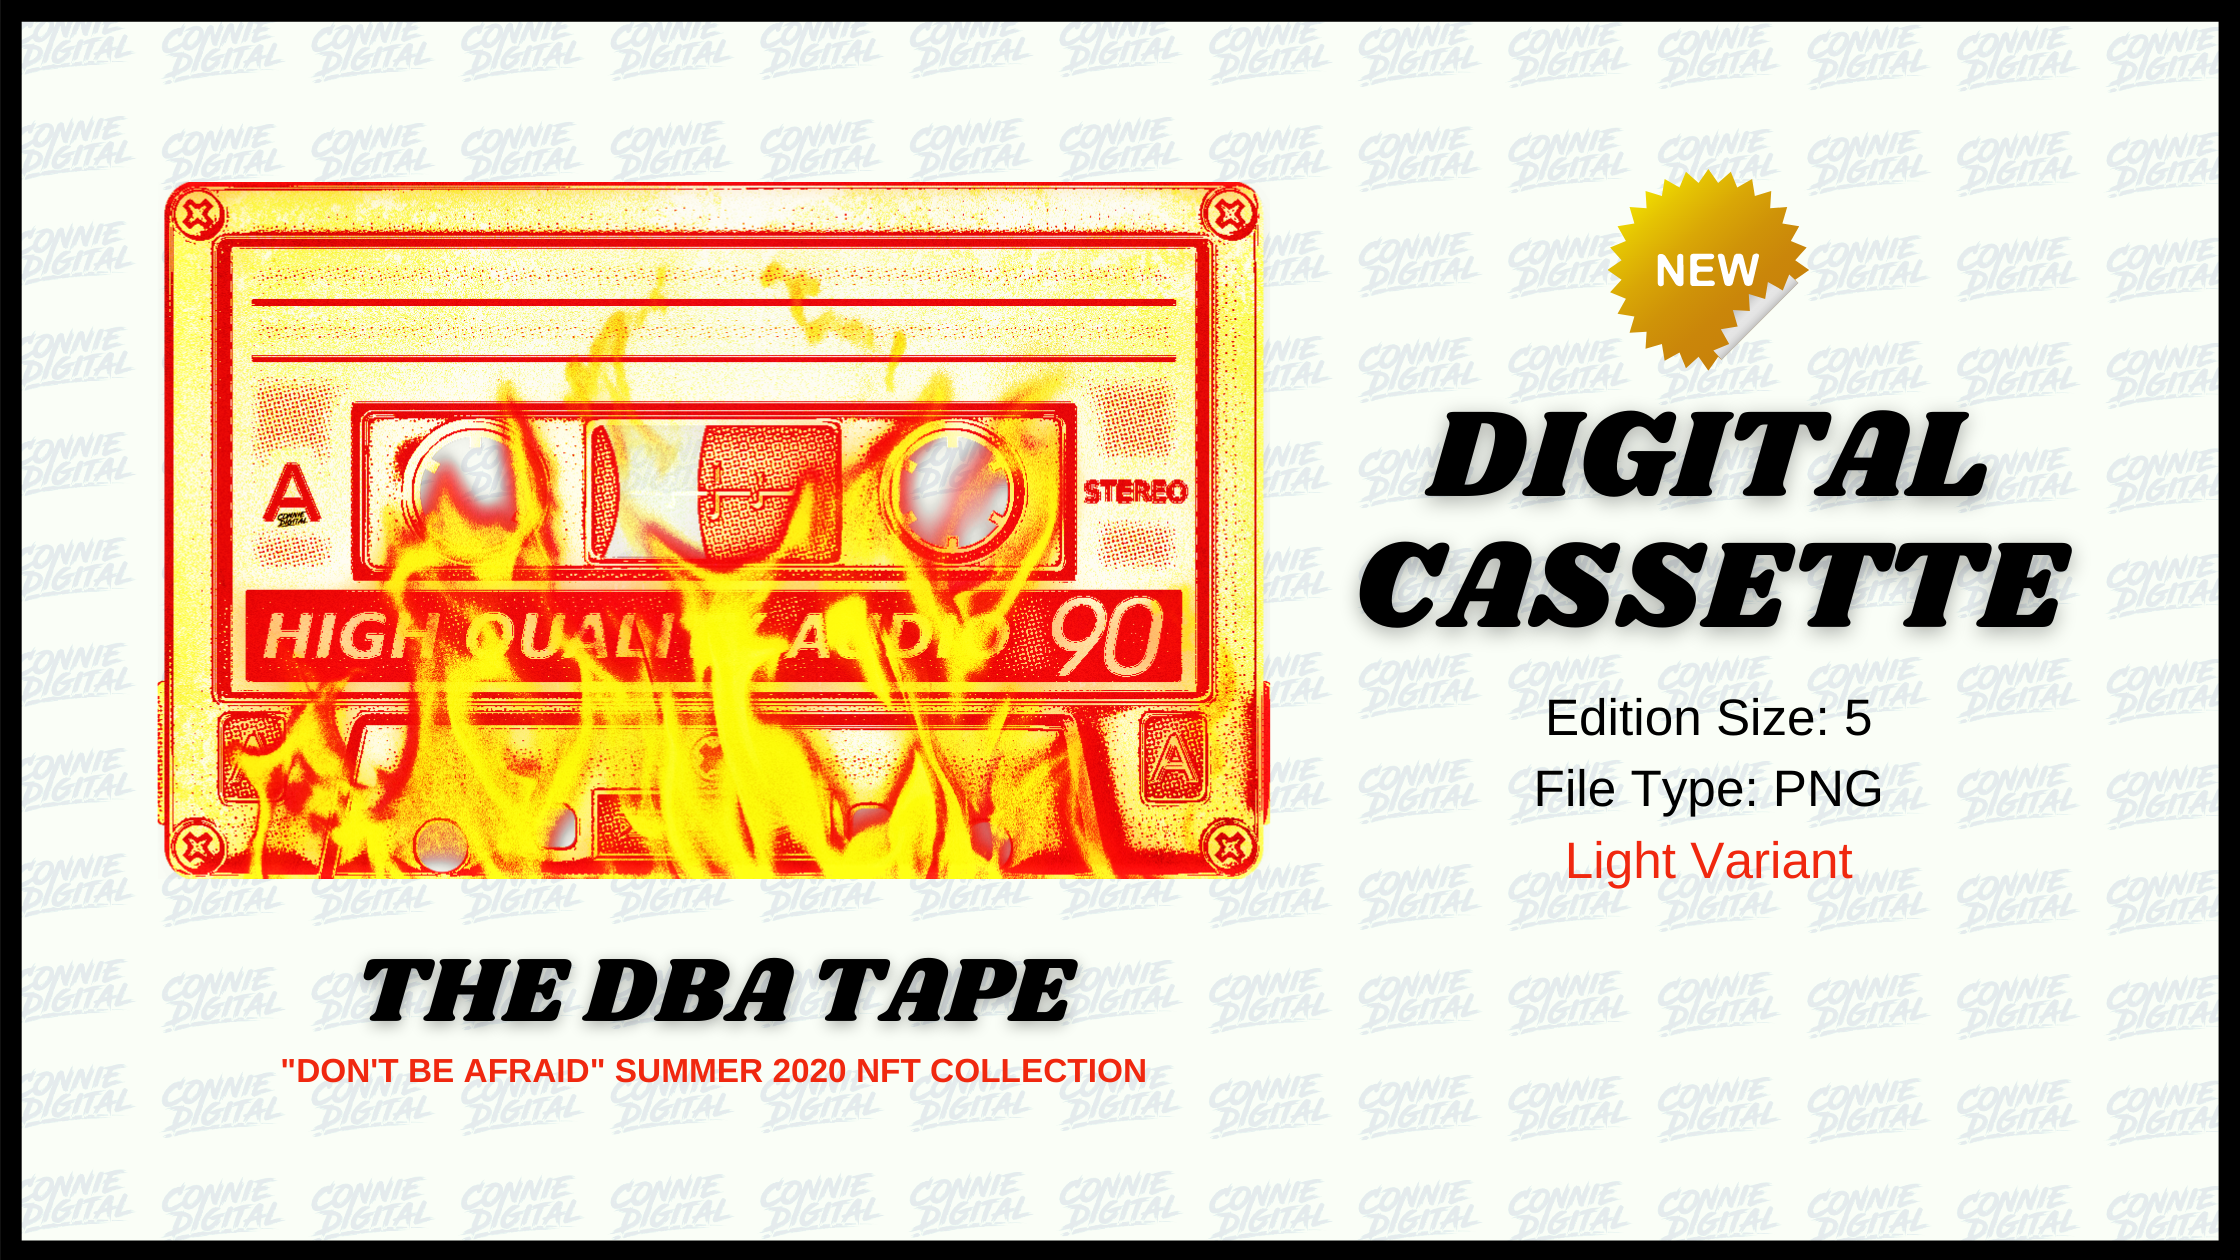 Digital Cassette Collection 2020 - Connie Digital Dont Be Afraid